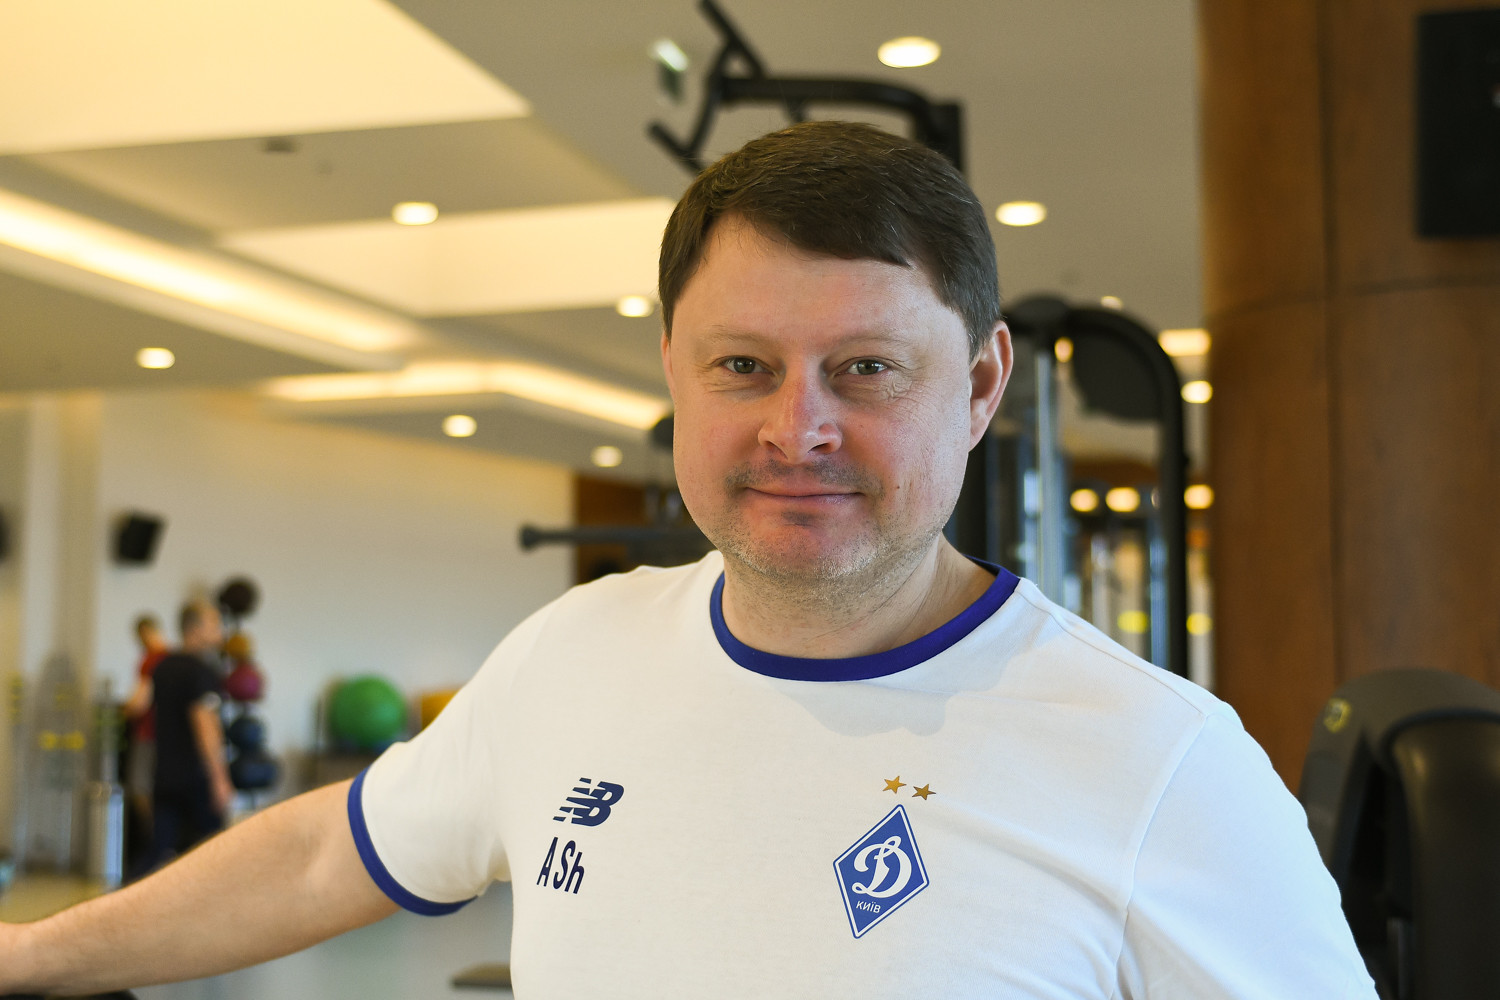 Andriy Shmorhun on injured players’ recovery